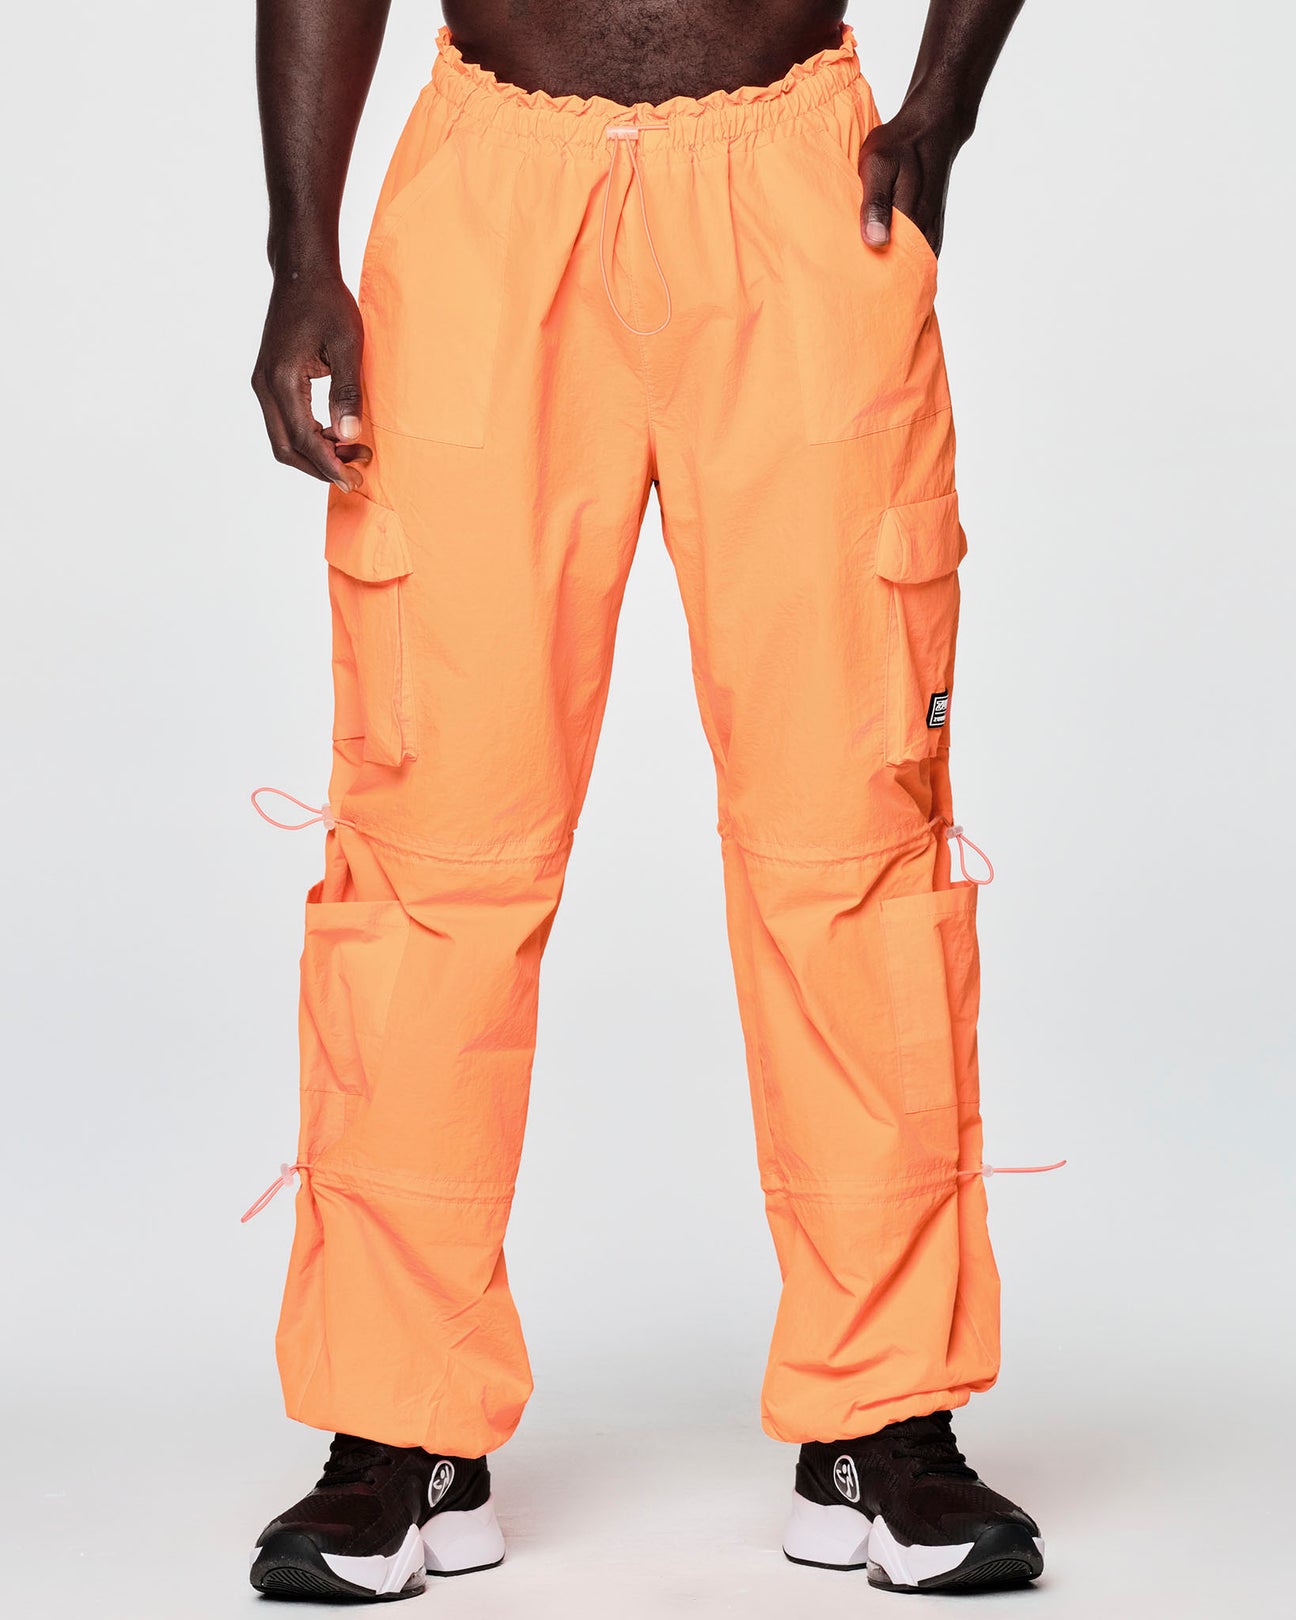 Zumba Wear 100% Nylon Solid Colored Orange Casual Pants Size X